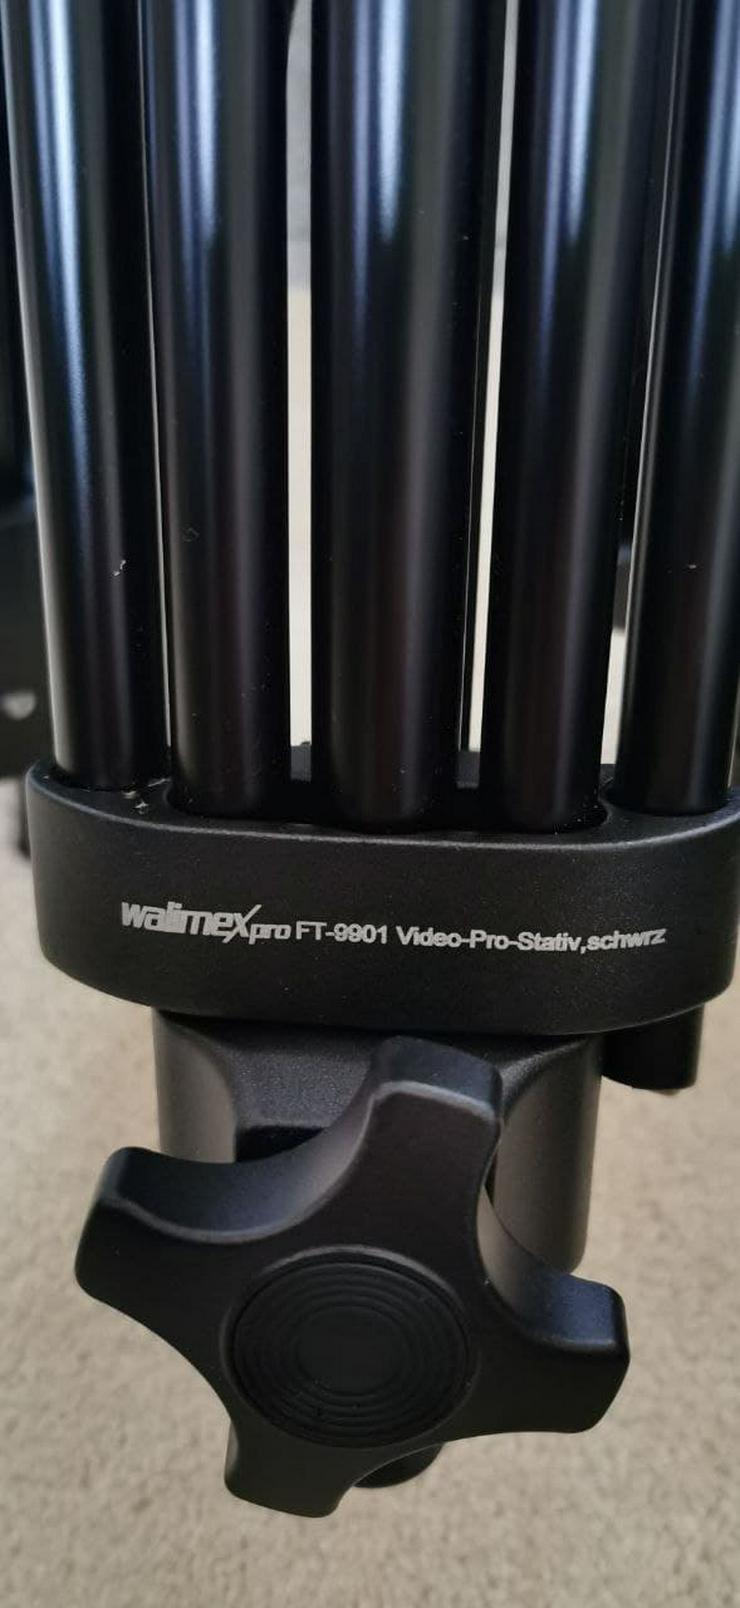 Walimex pro FT-9901 Video-Pro-Stativ, schwarz & Rollwagen - Stative - Bild 2